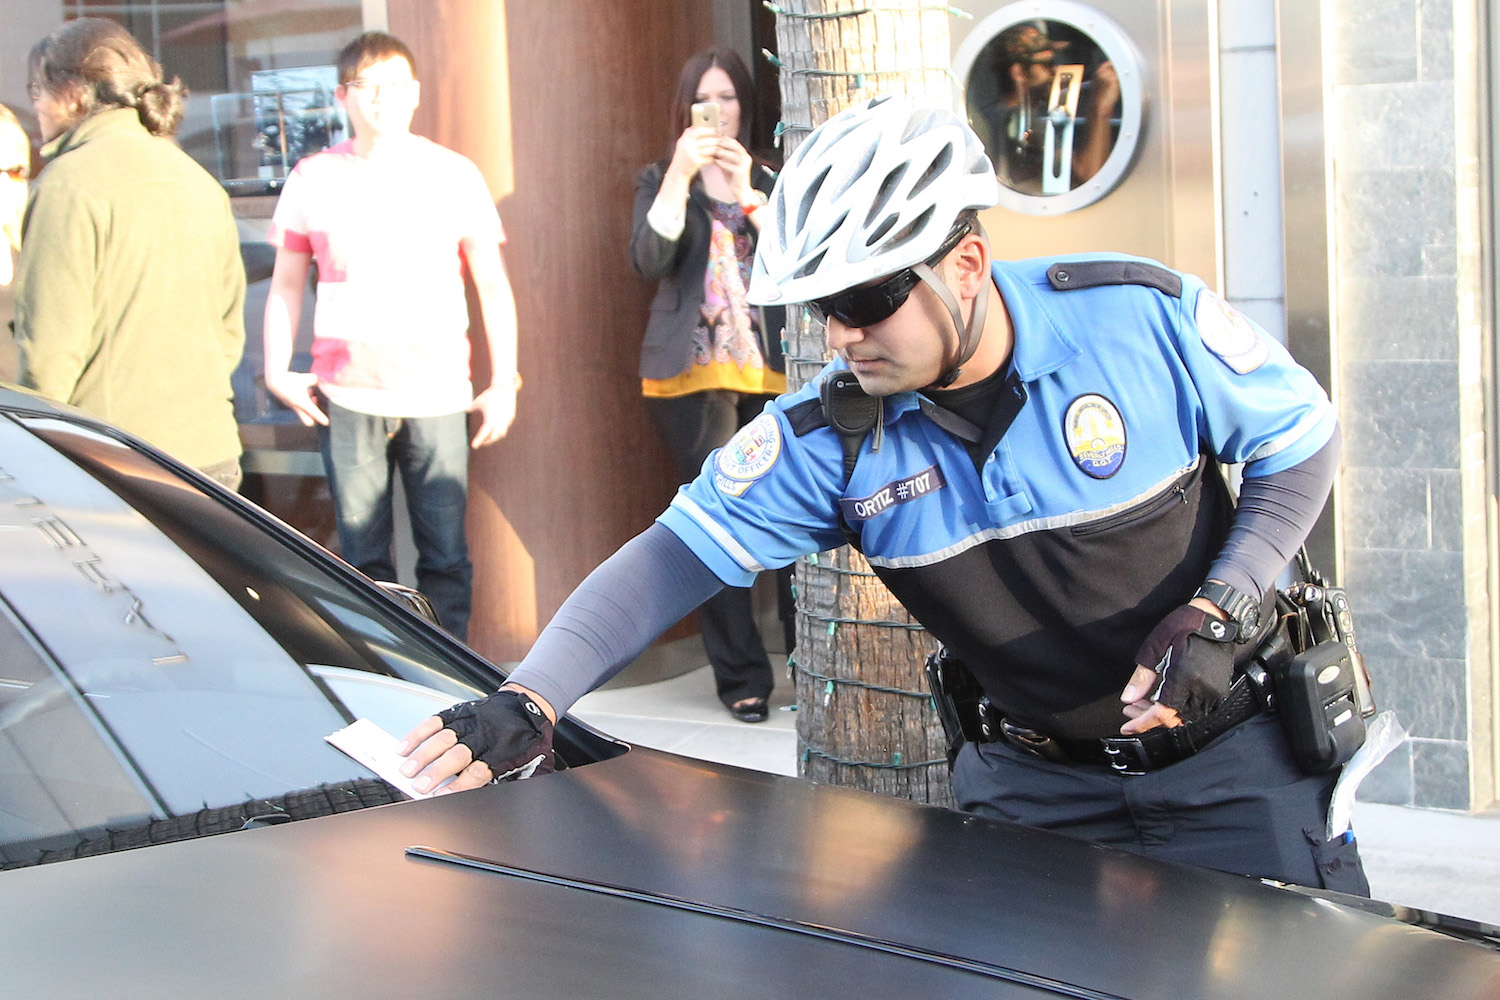 Parking enforcement officer leaving a ticket on a black car.